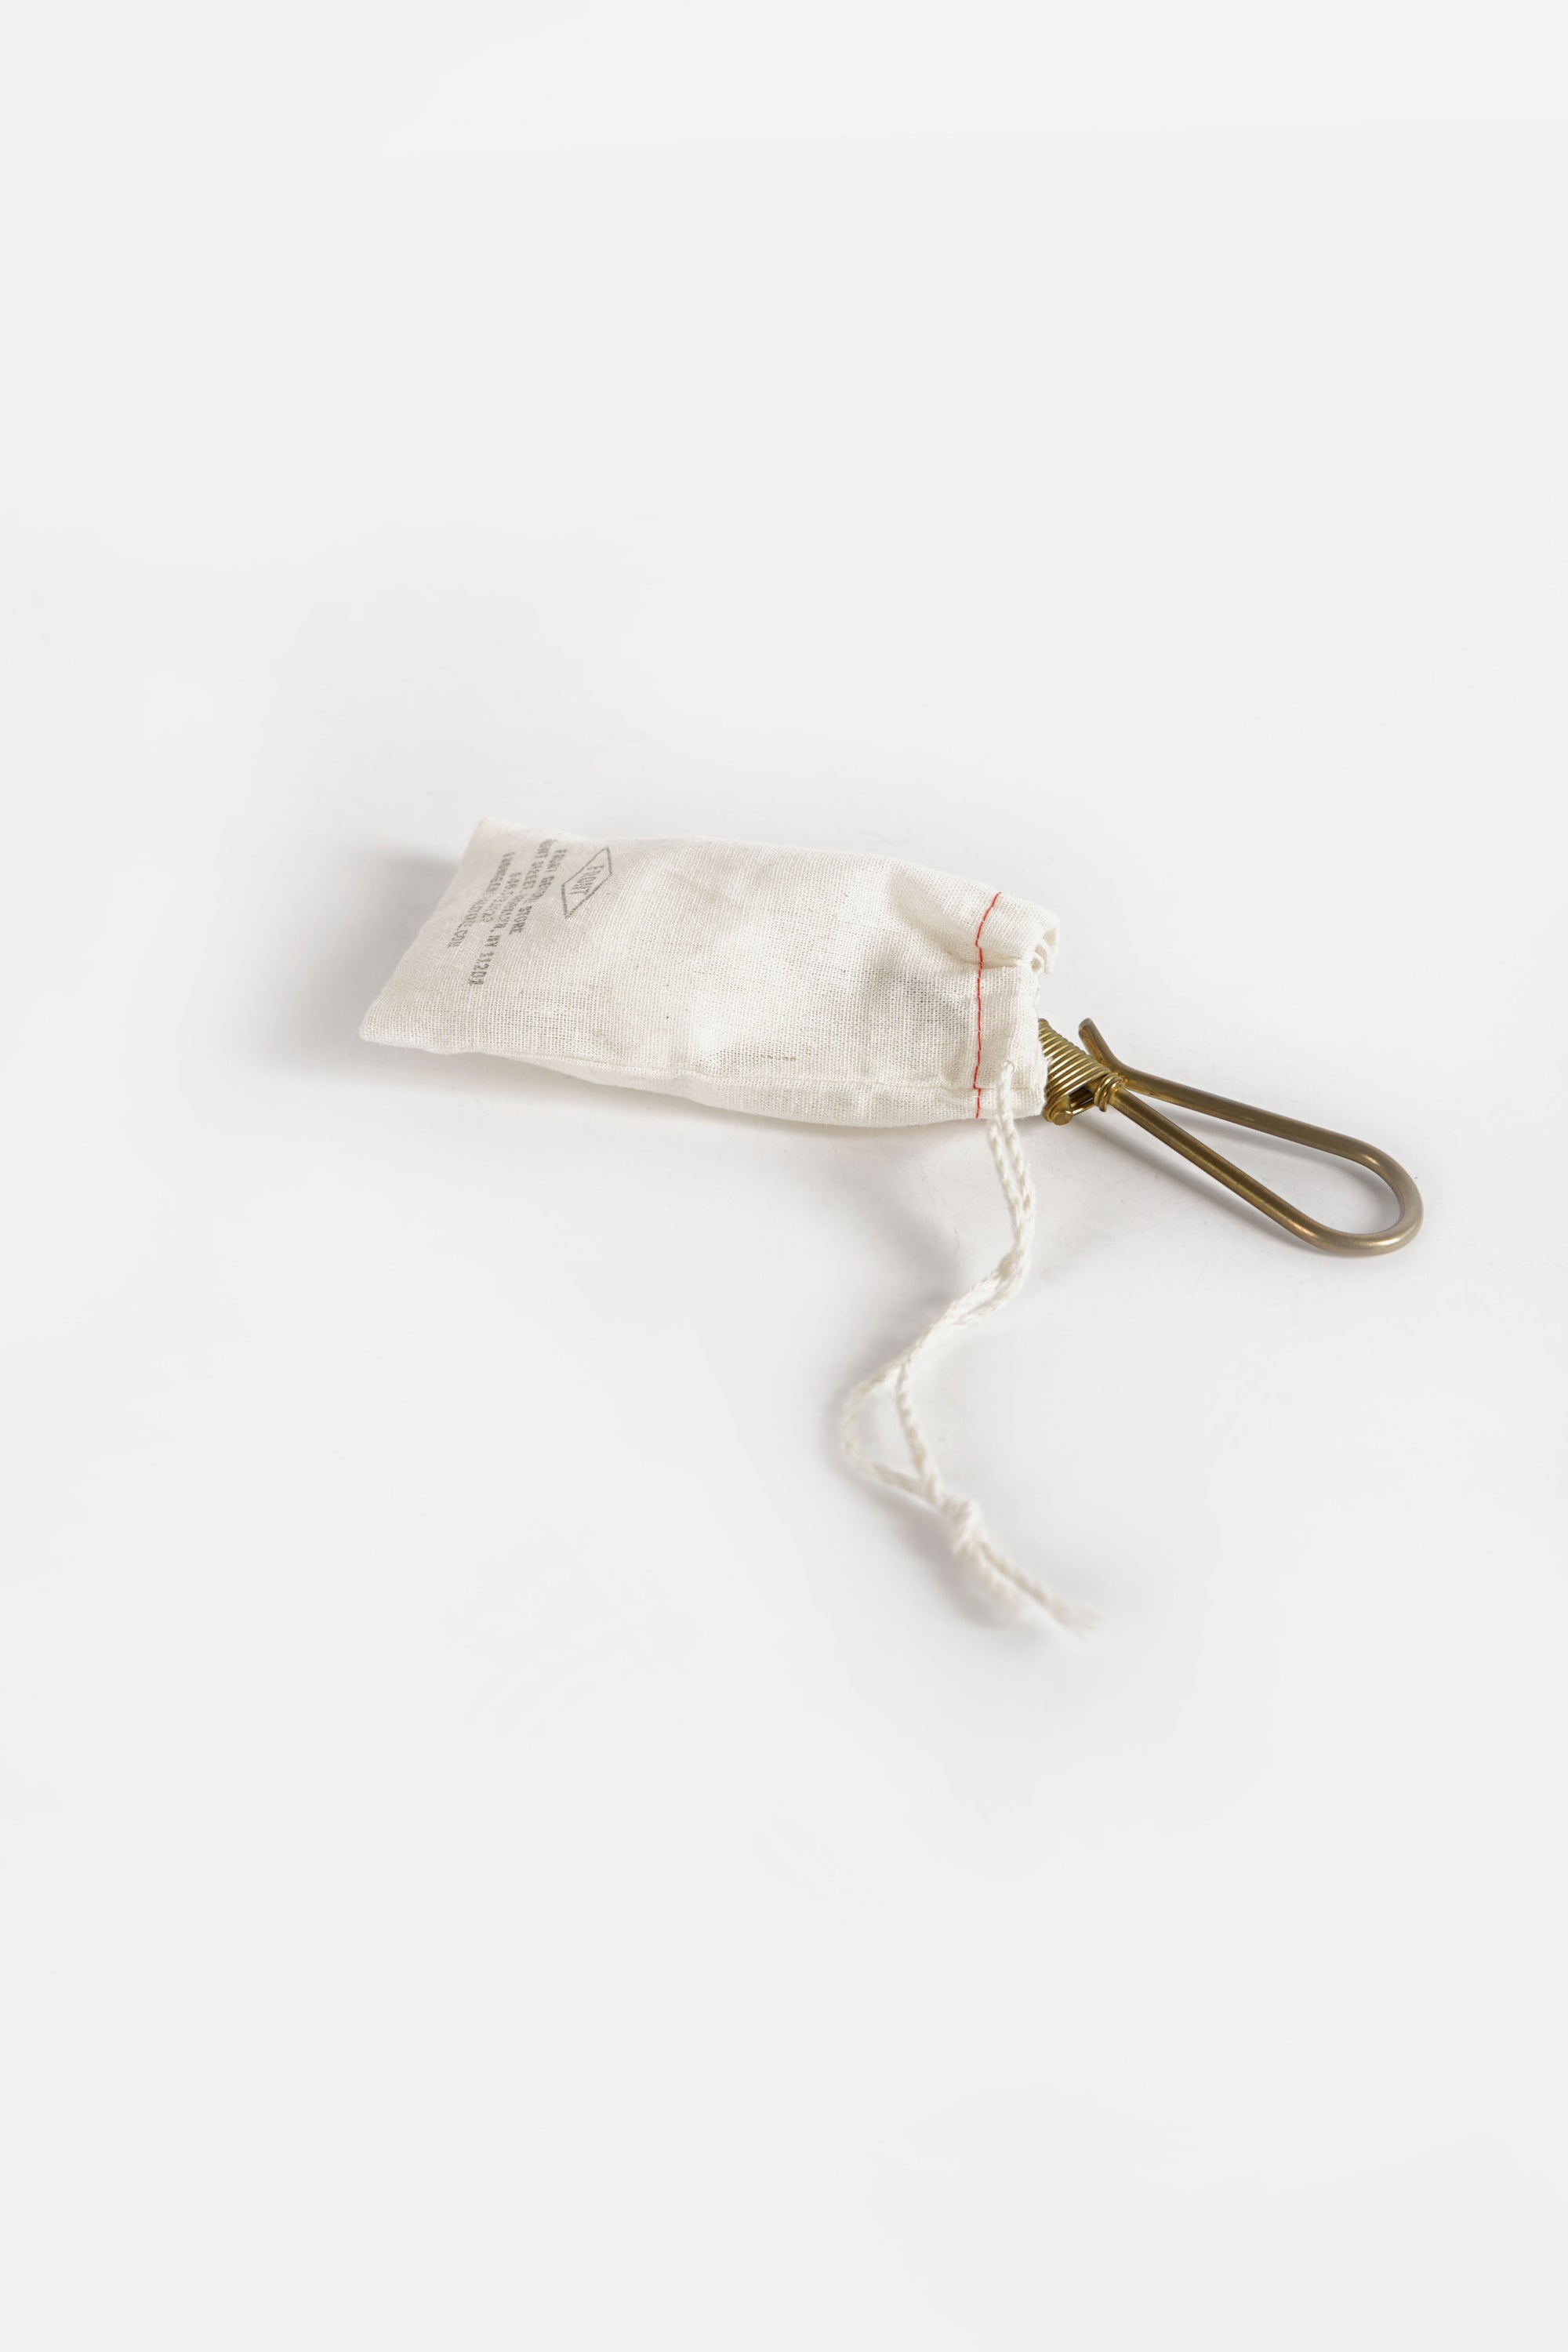 Wrapped Wire Key Hook Set